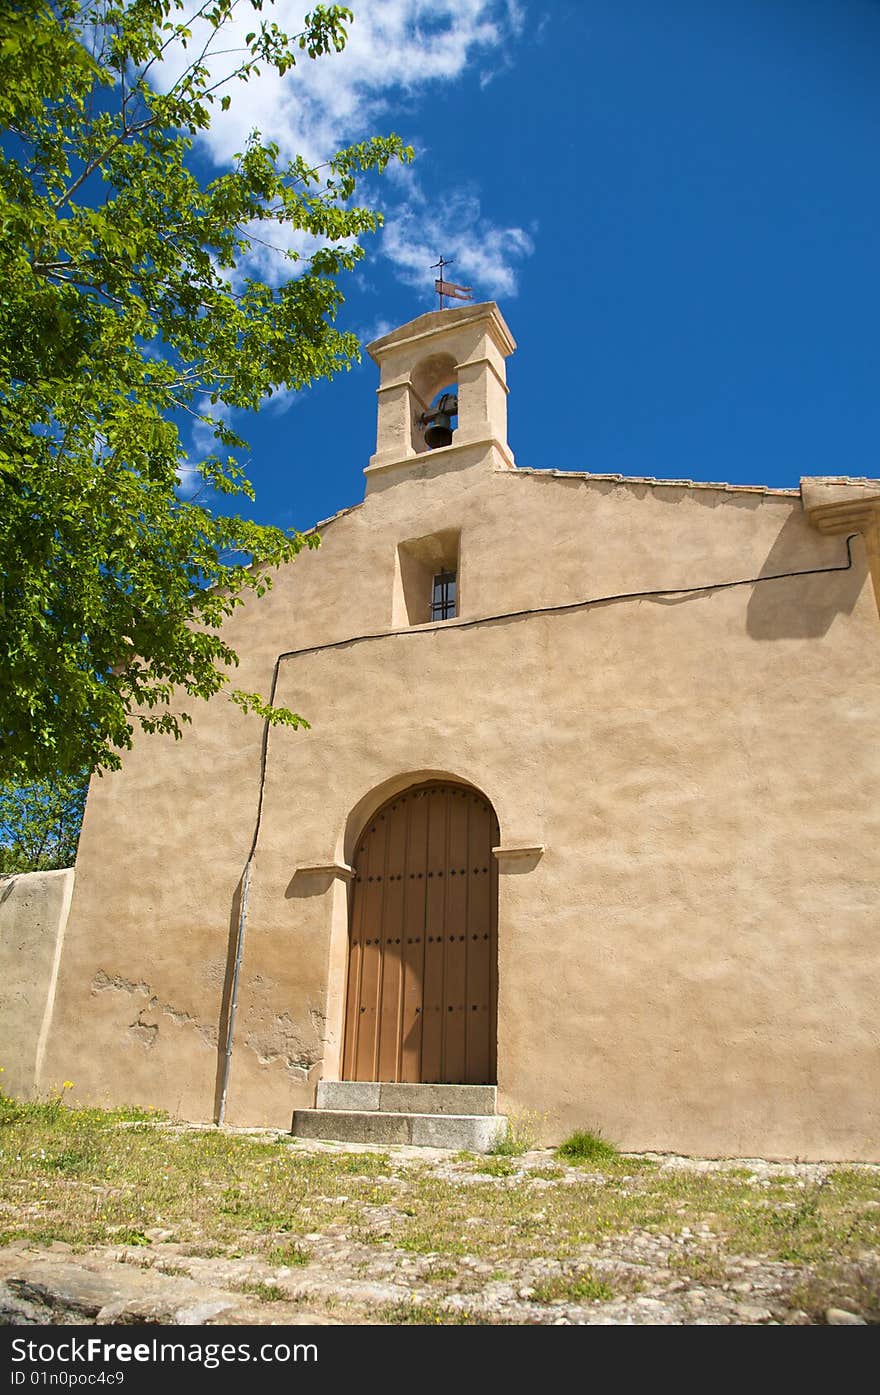 Small chapel in Villarreal of Saint Charles village in Caceres Spain. Small chapel in Villarreal of Saint Charles village in Caceres Spain